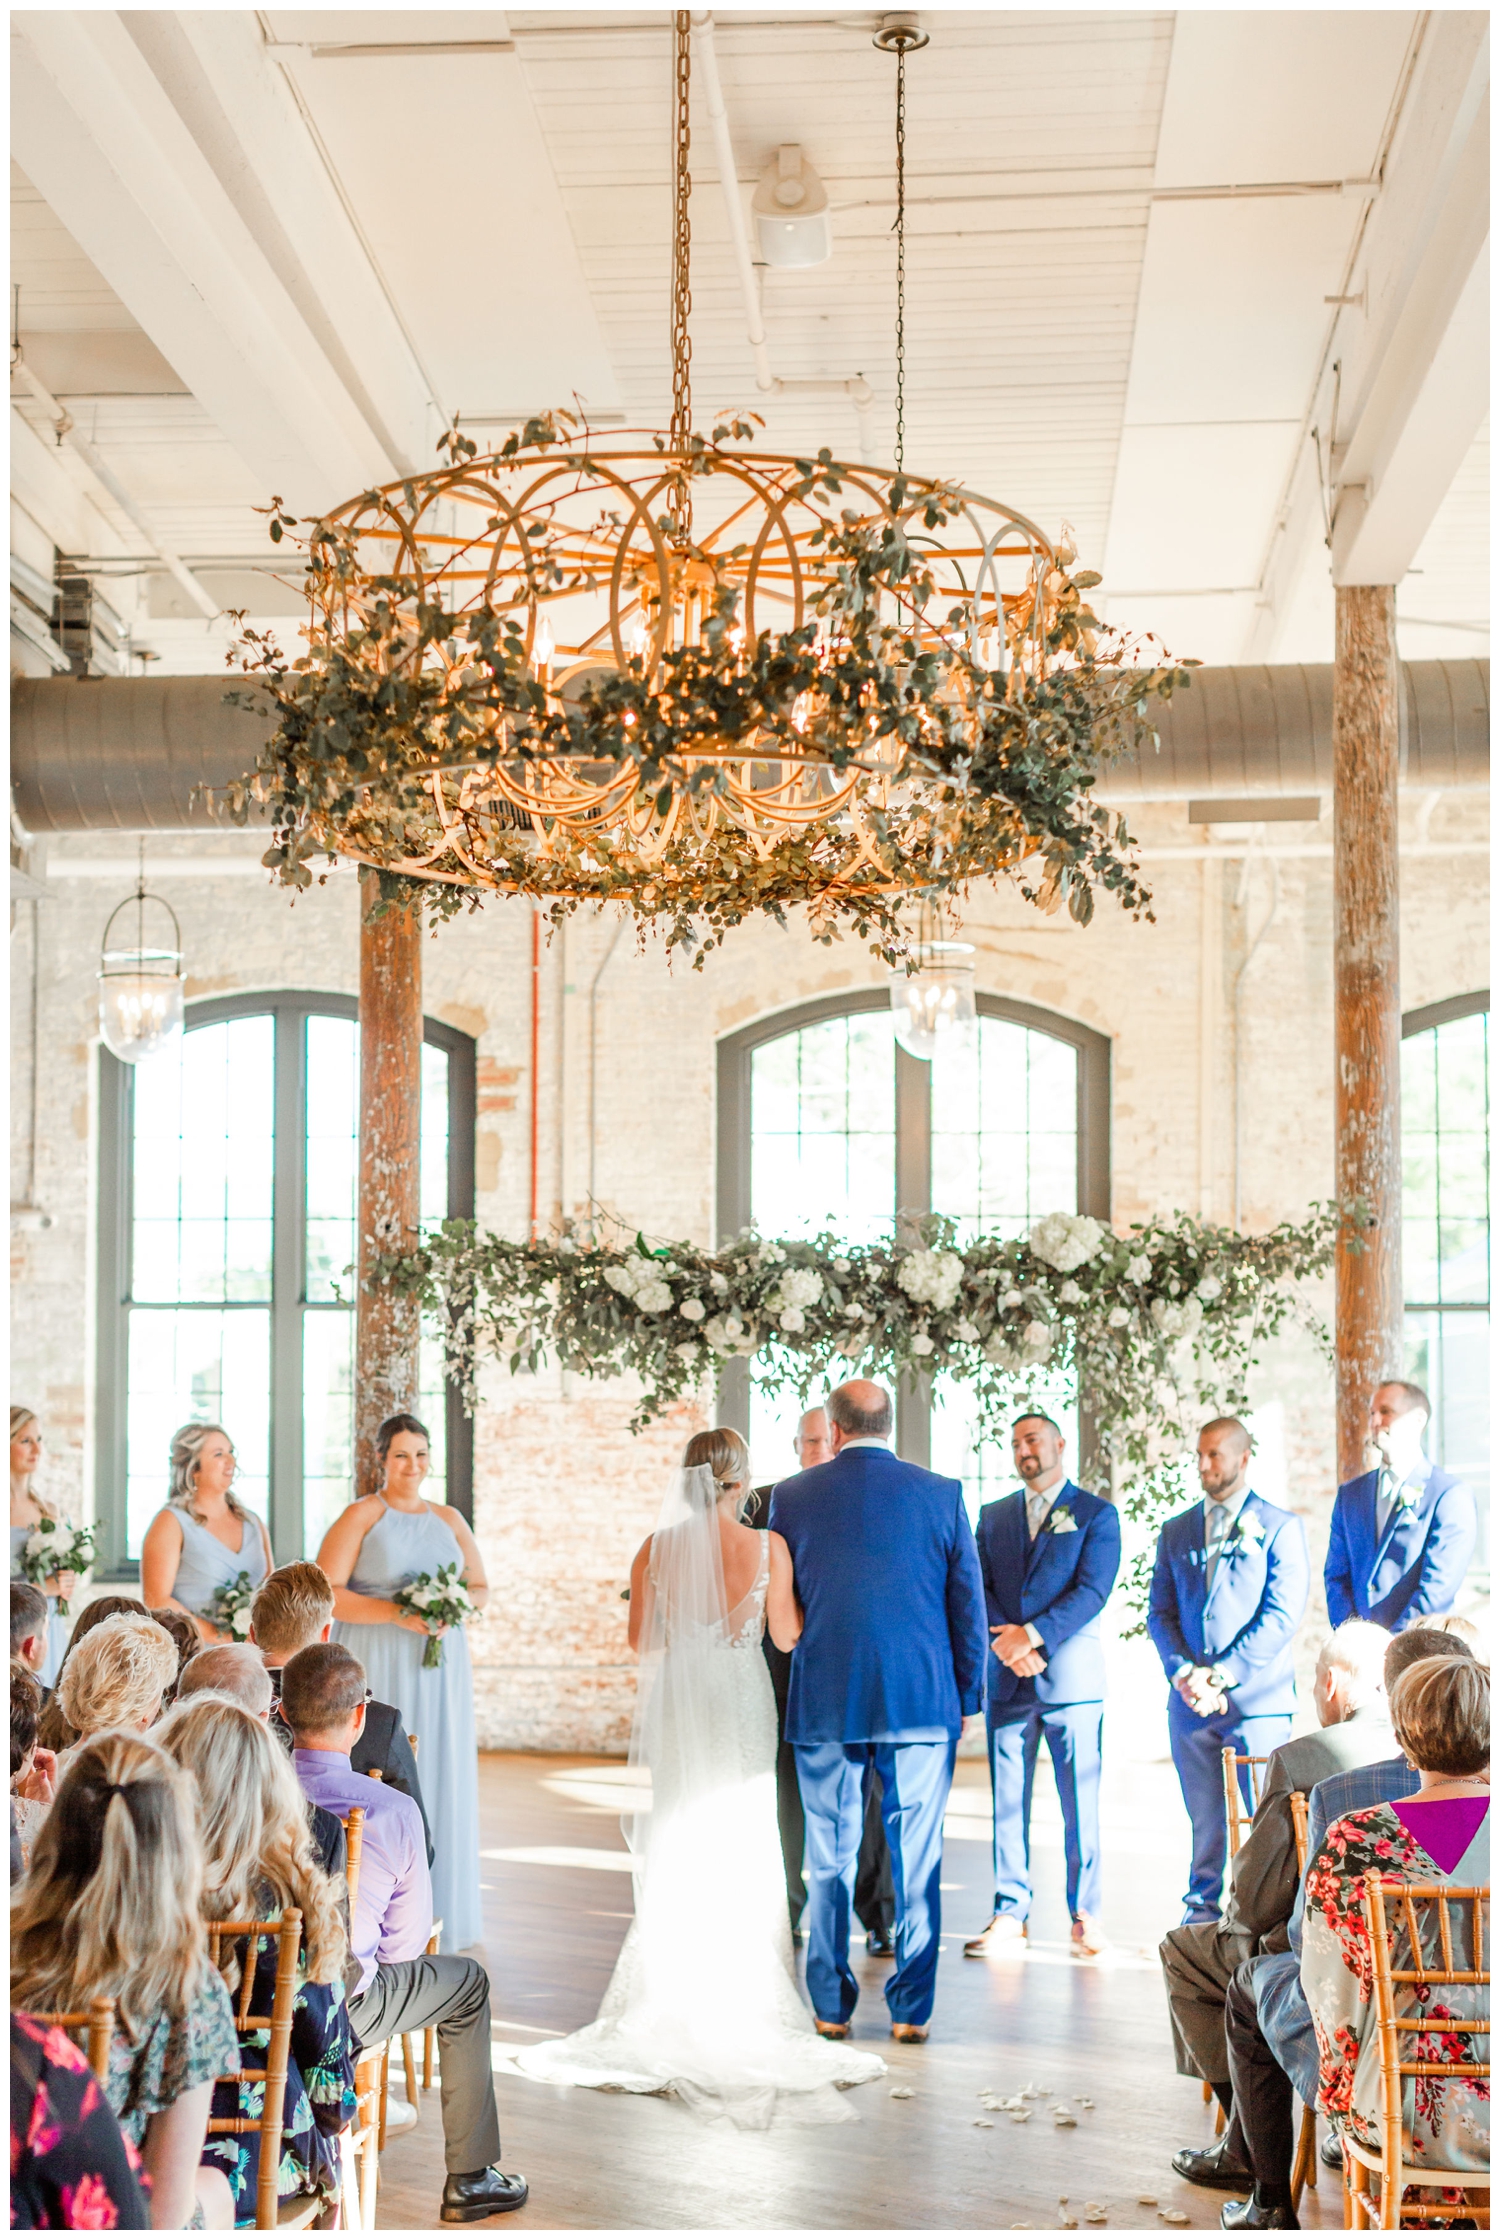 the ceremony space inside The Cedar Room Charleston Wedding